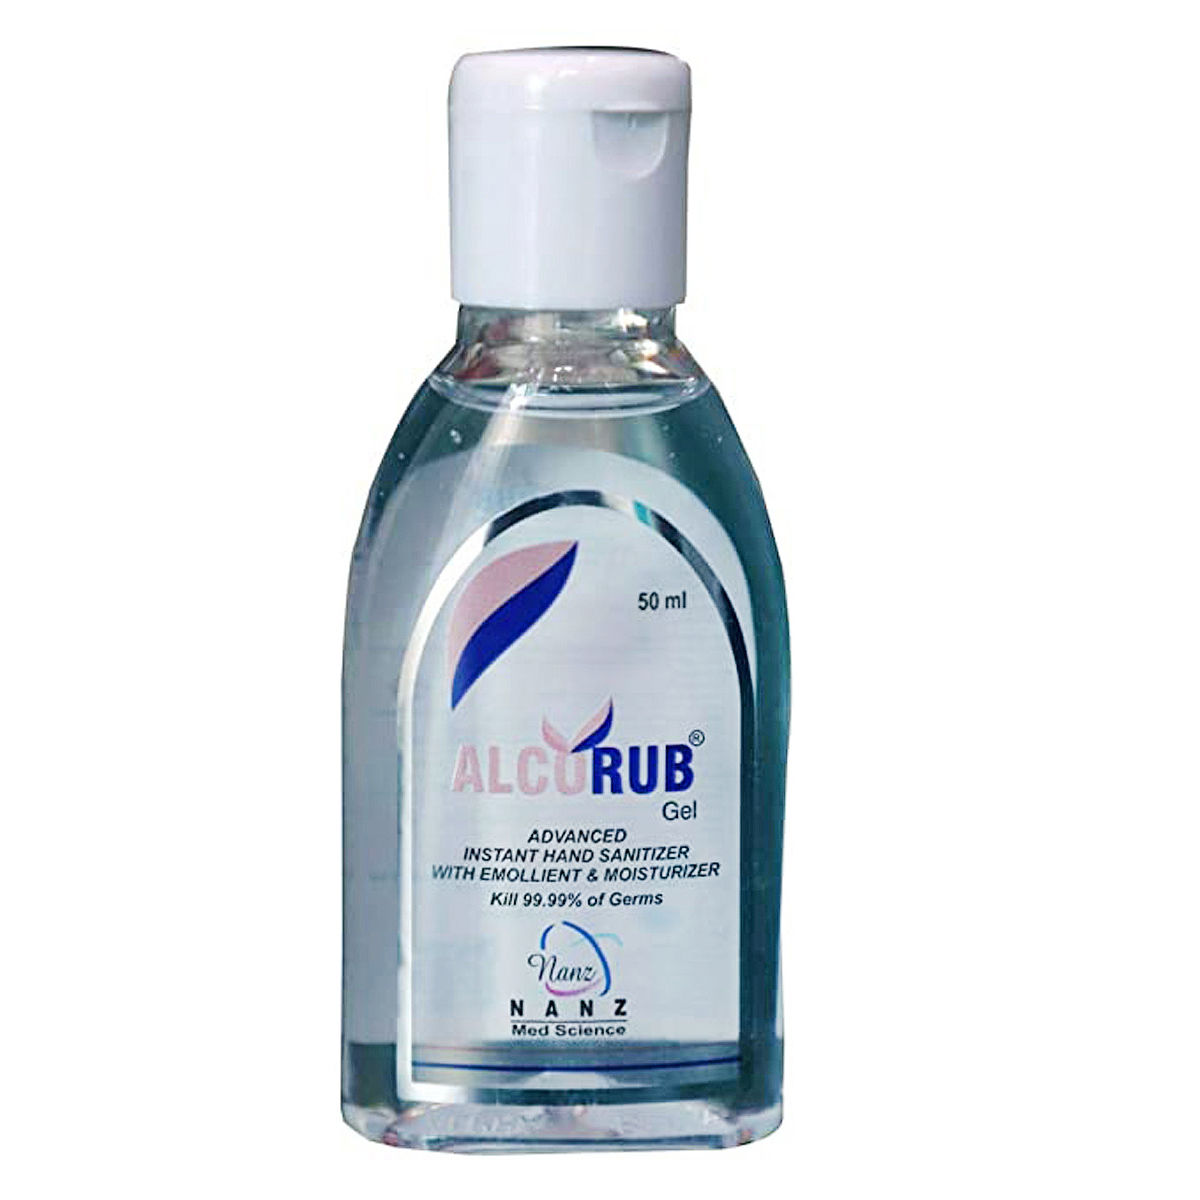 Buy Alcorub Gel Sanitizer, 50 ml Online